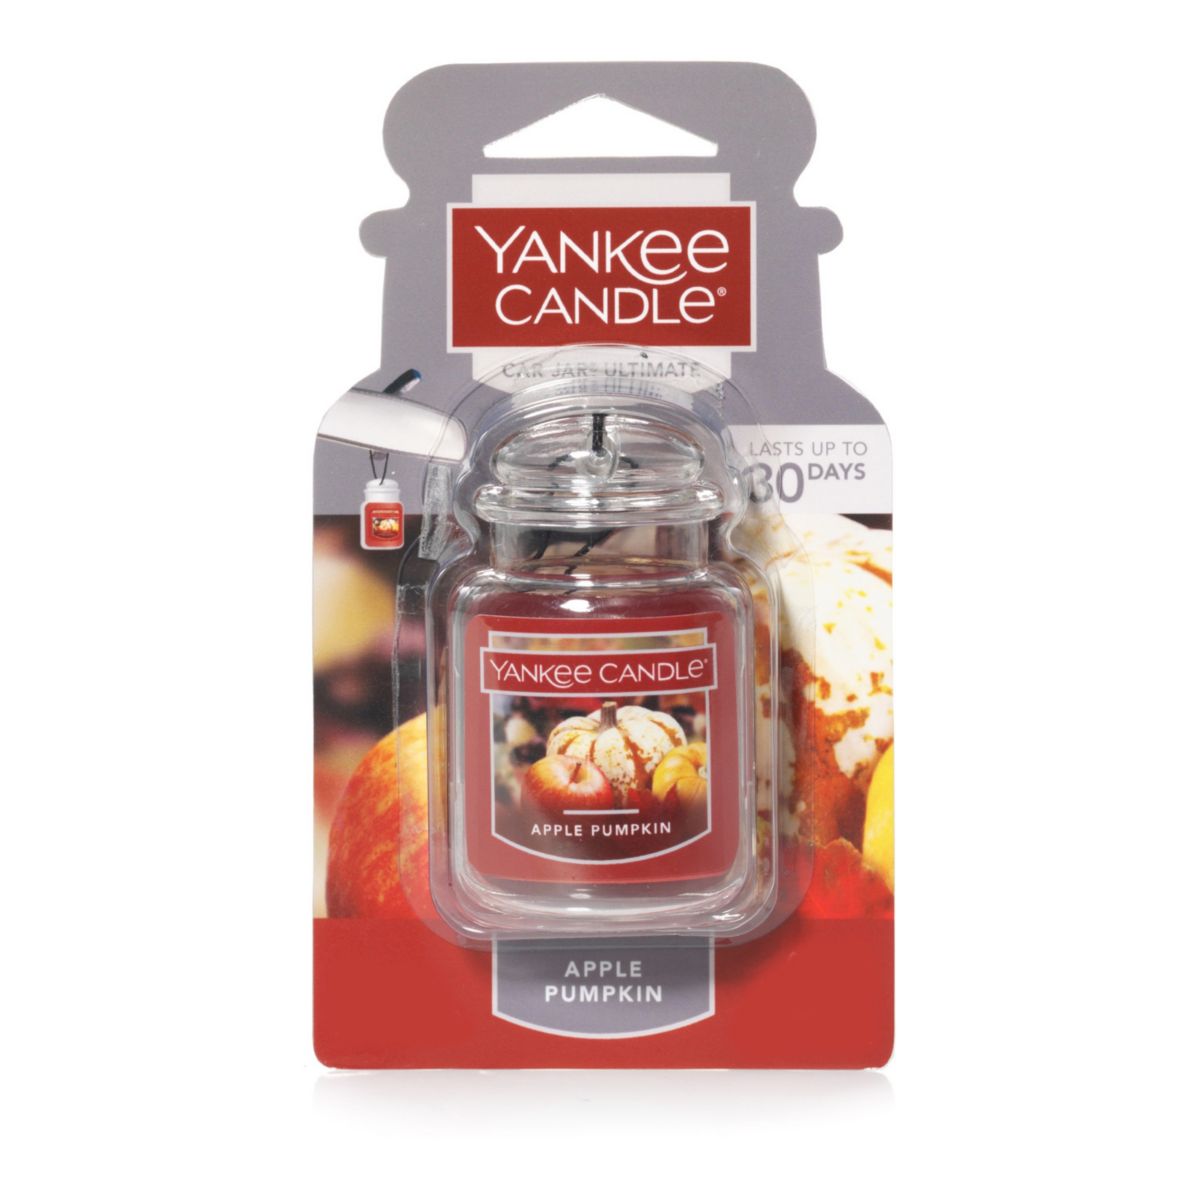 Yankee Candle Apple Pumpkin Car Jar Ultimate Yankee Candle